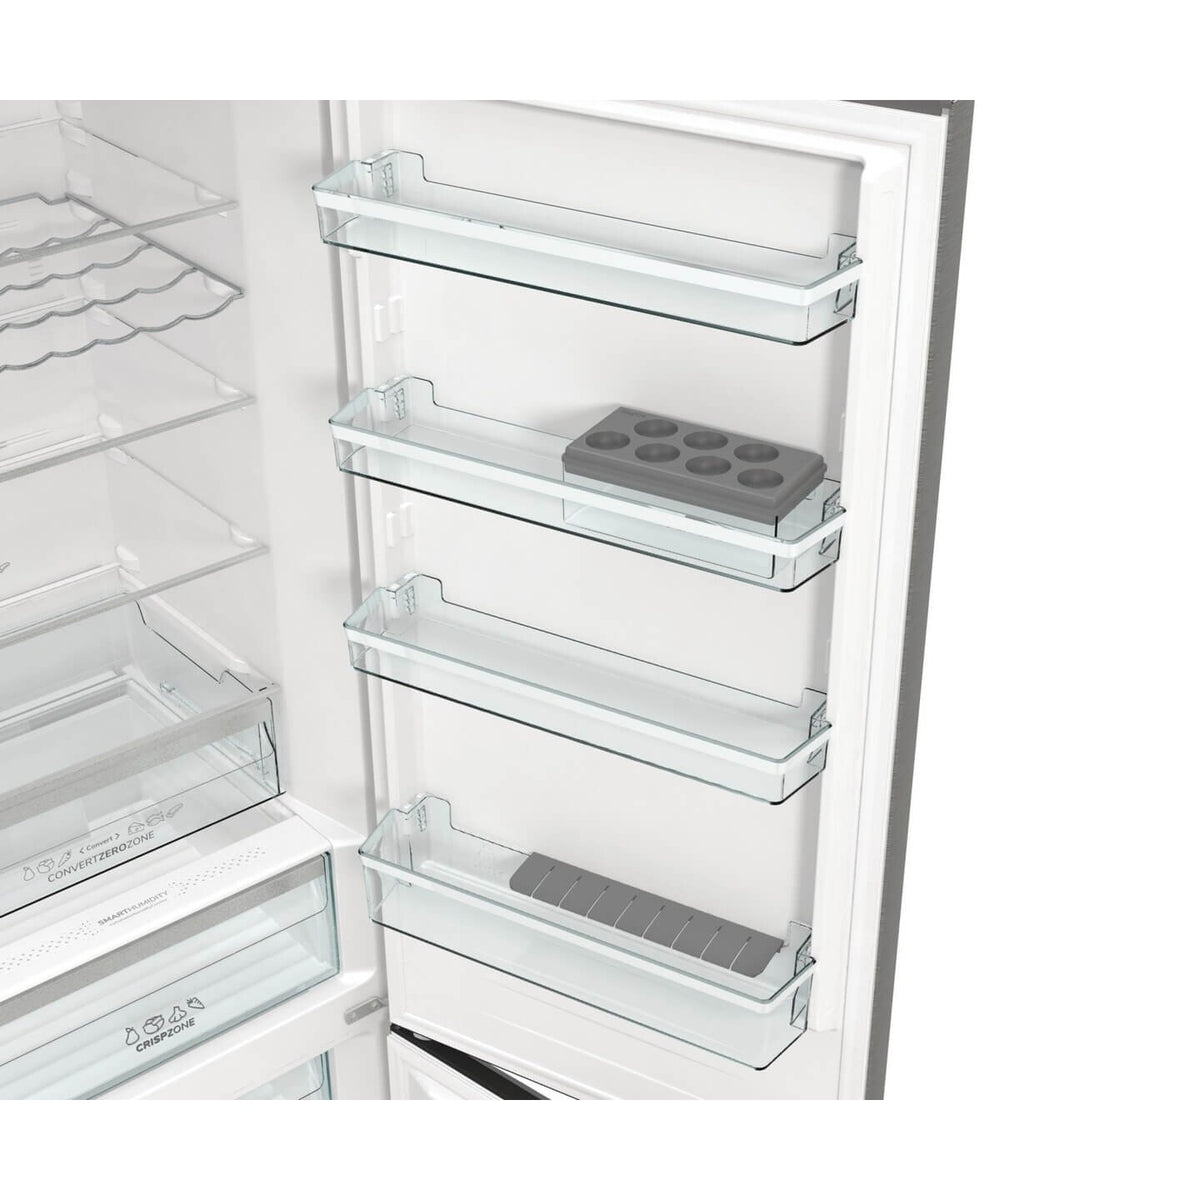 Kombinovaná chladnička s mrazničkou dole Gorenje NRC620CSXL4